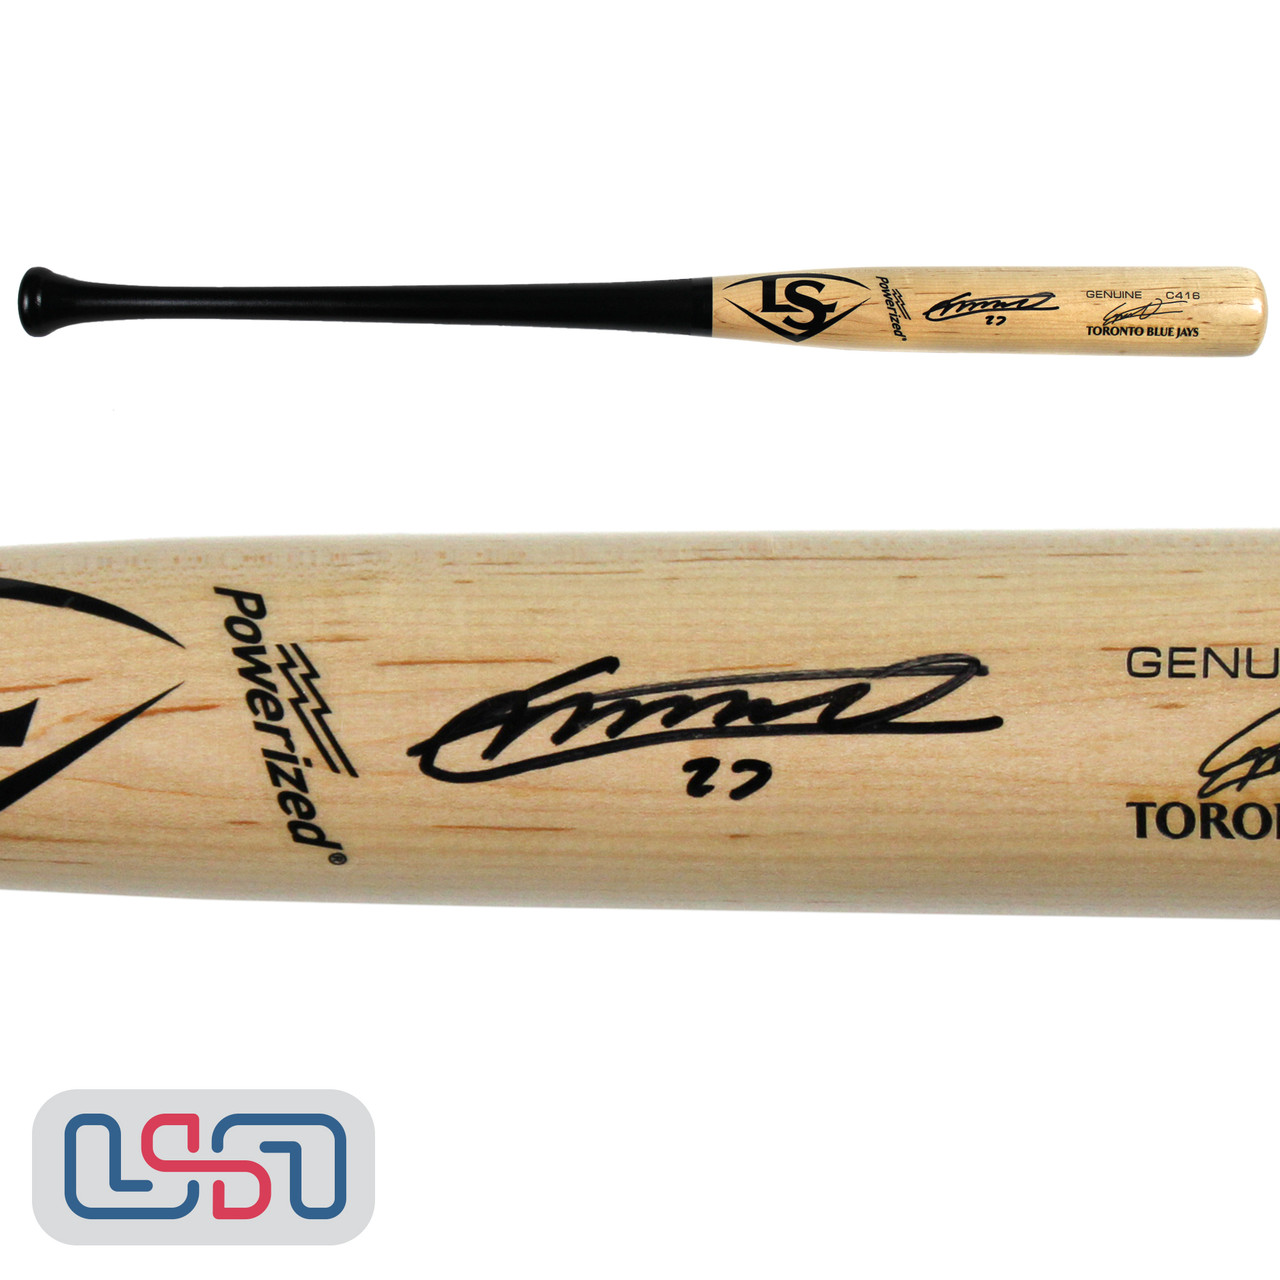 Nolan Arenado Signed Pro Model Baseball Bat Auction